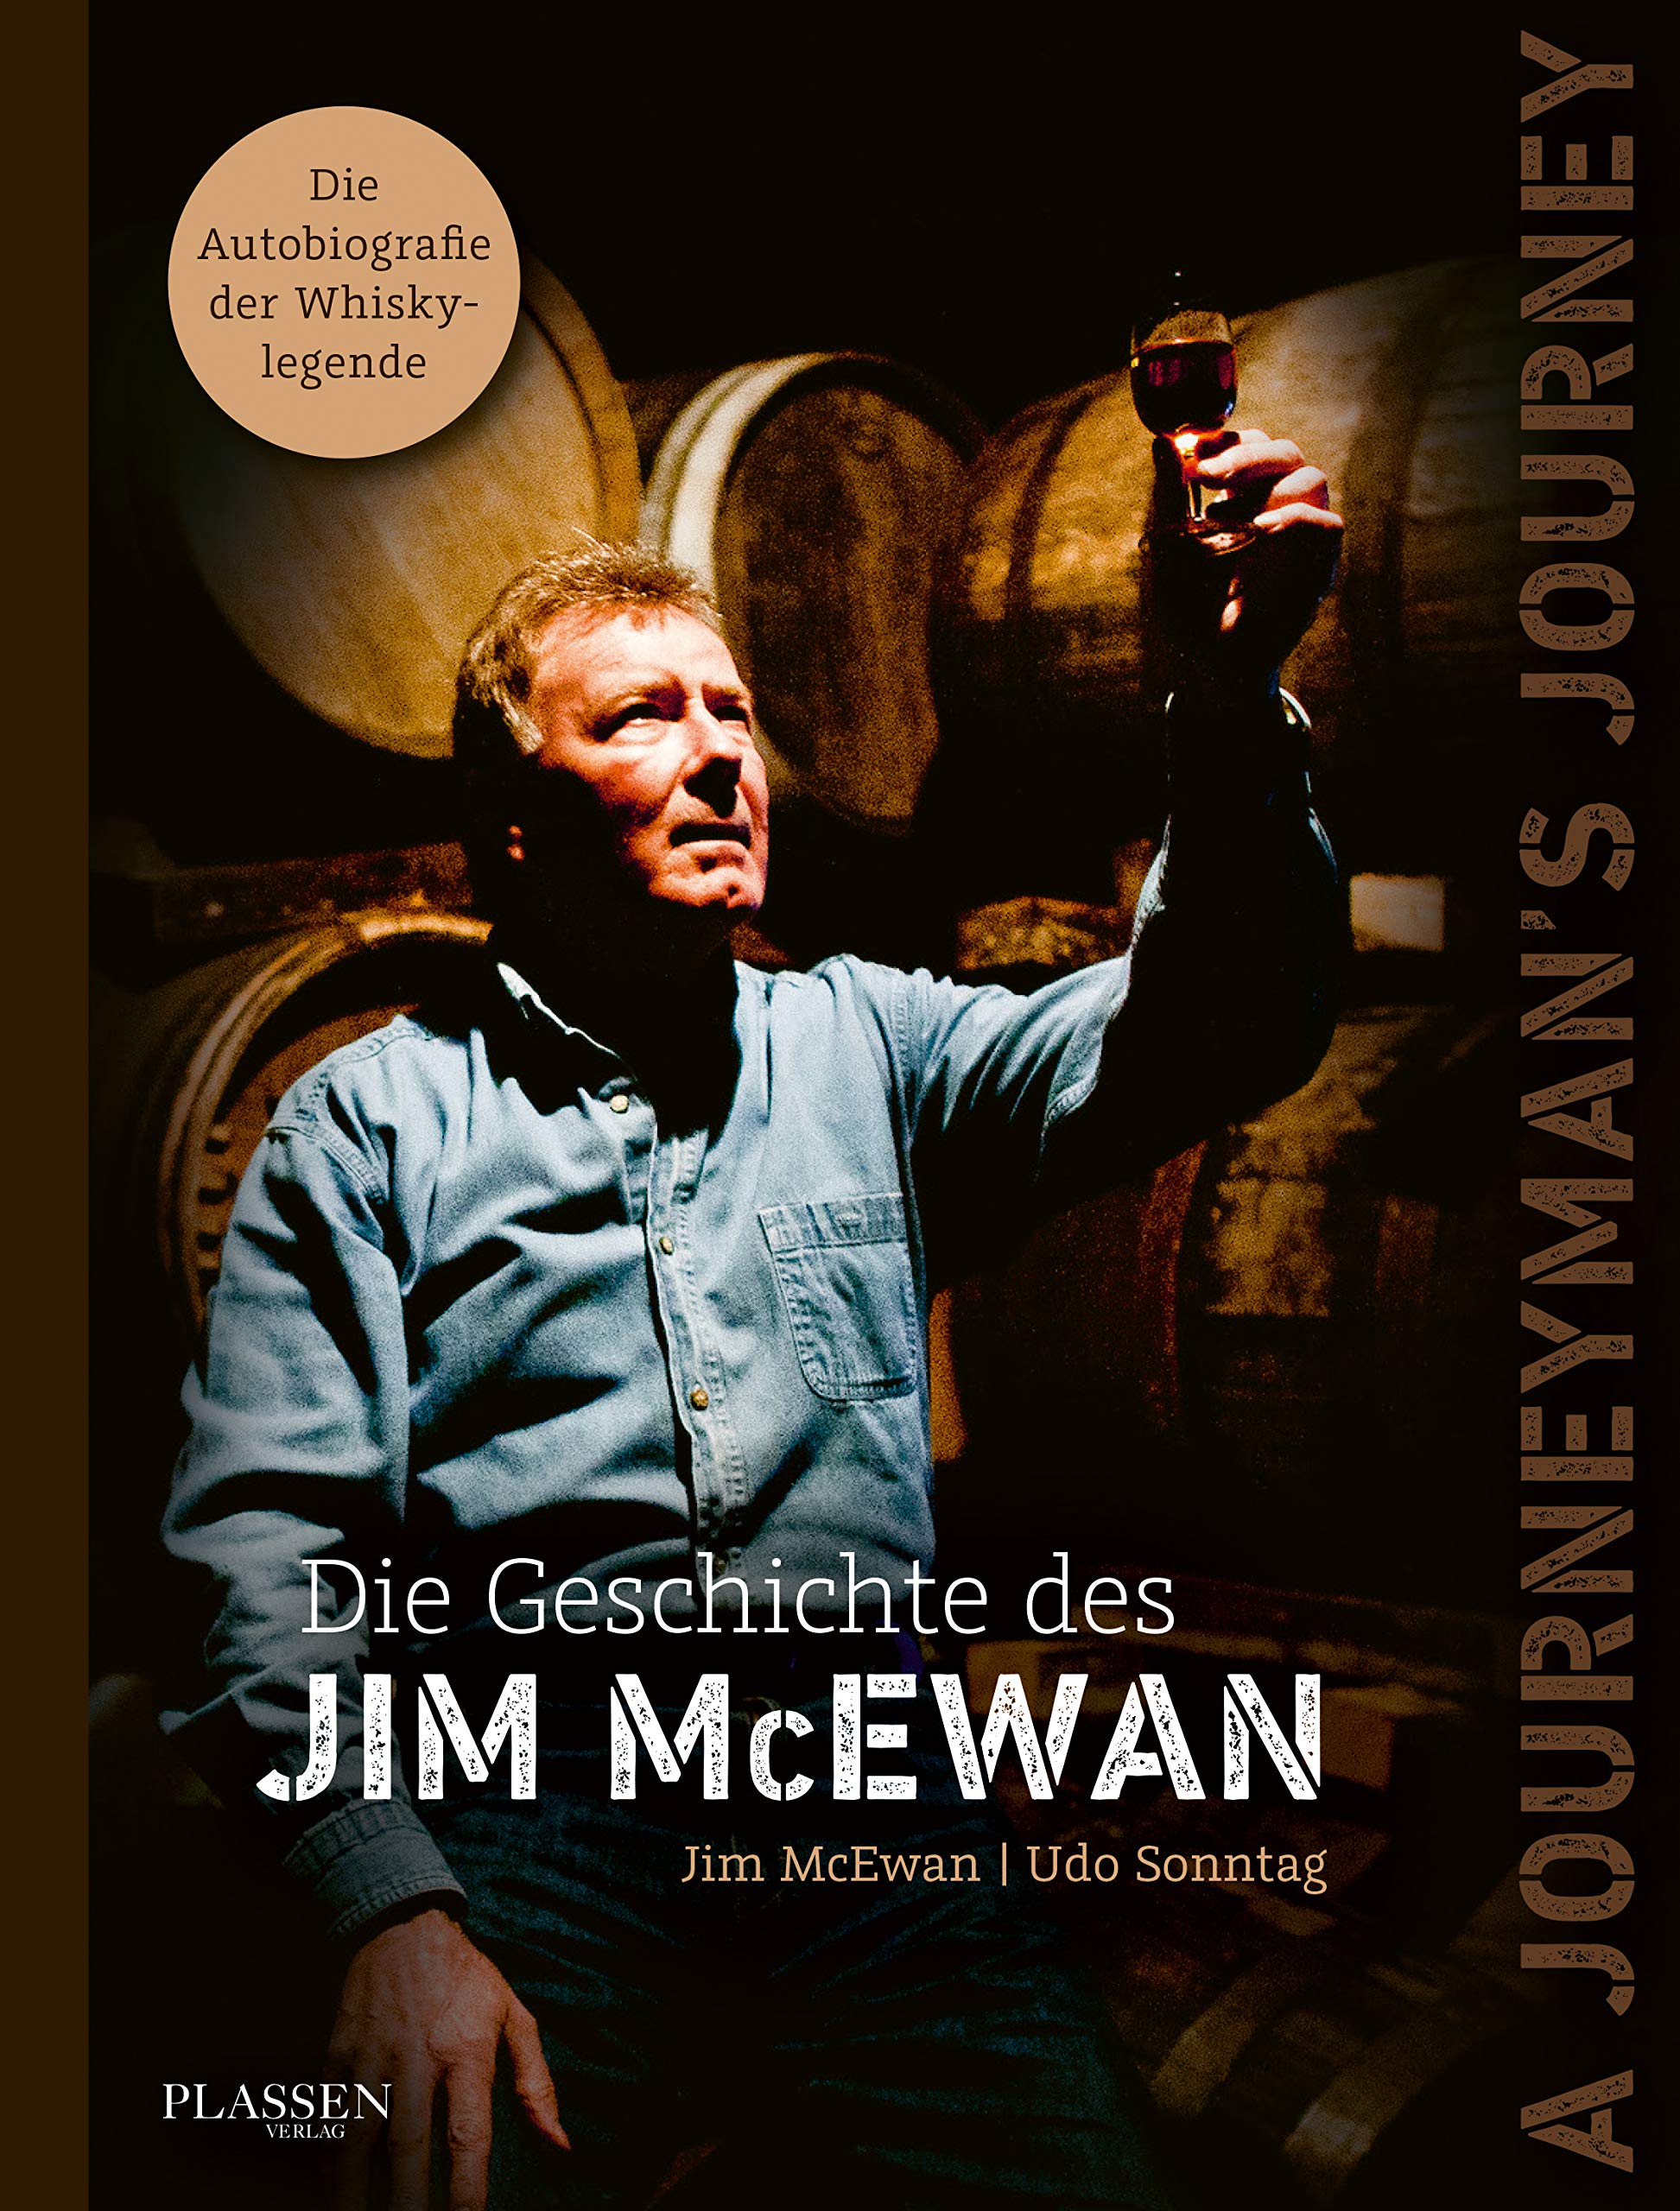 Jim McEwan: A Journeyman’s Journey